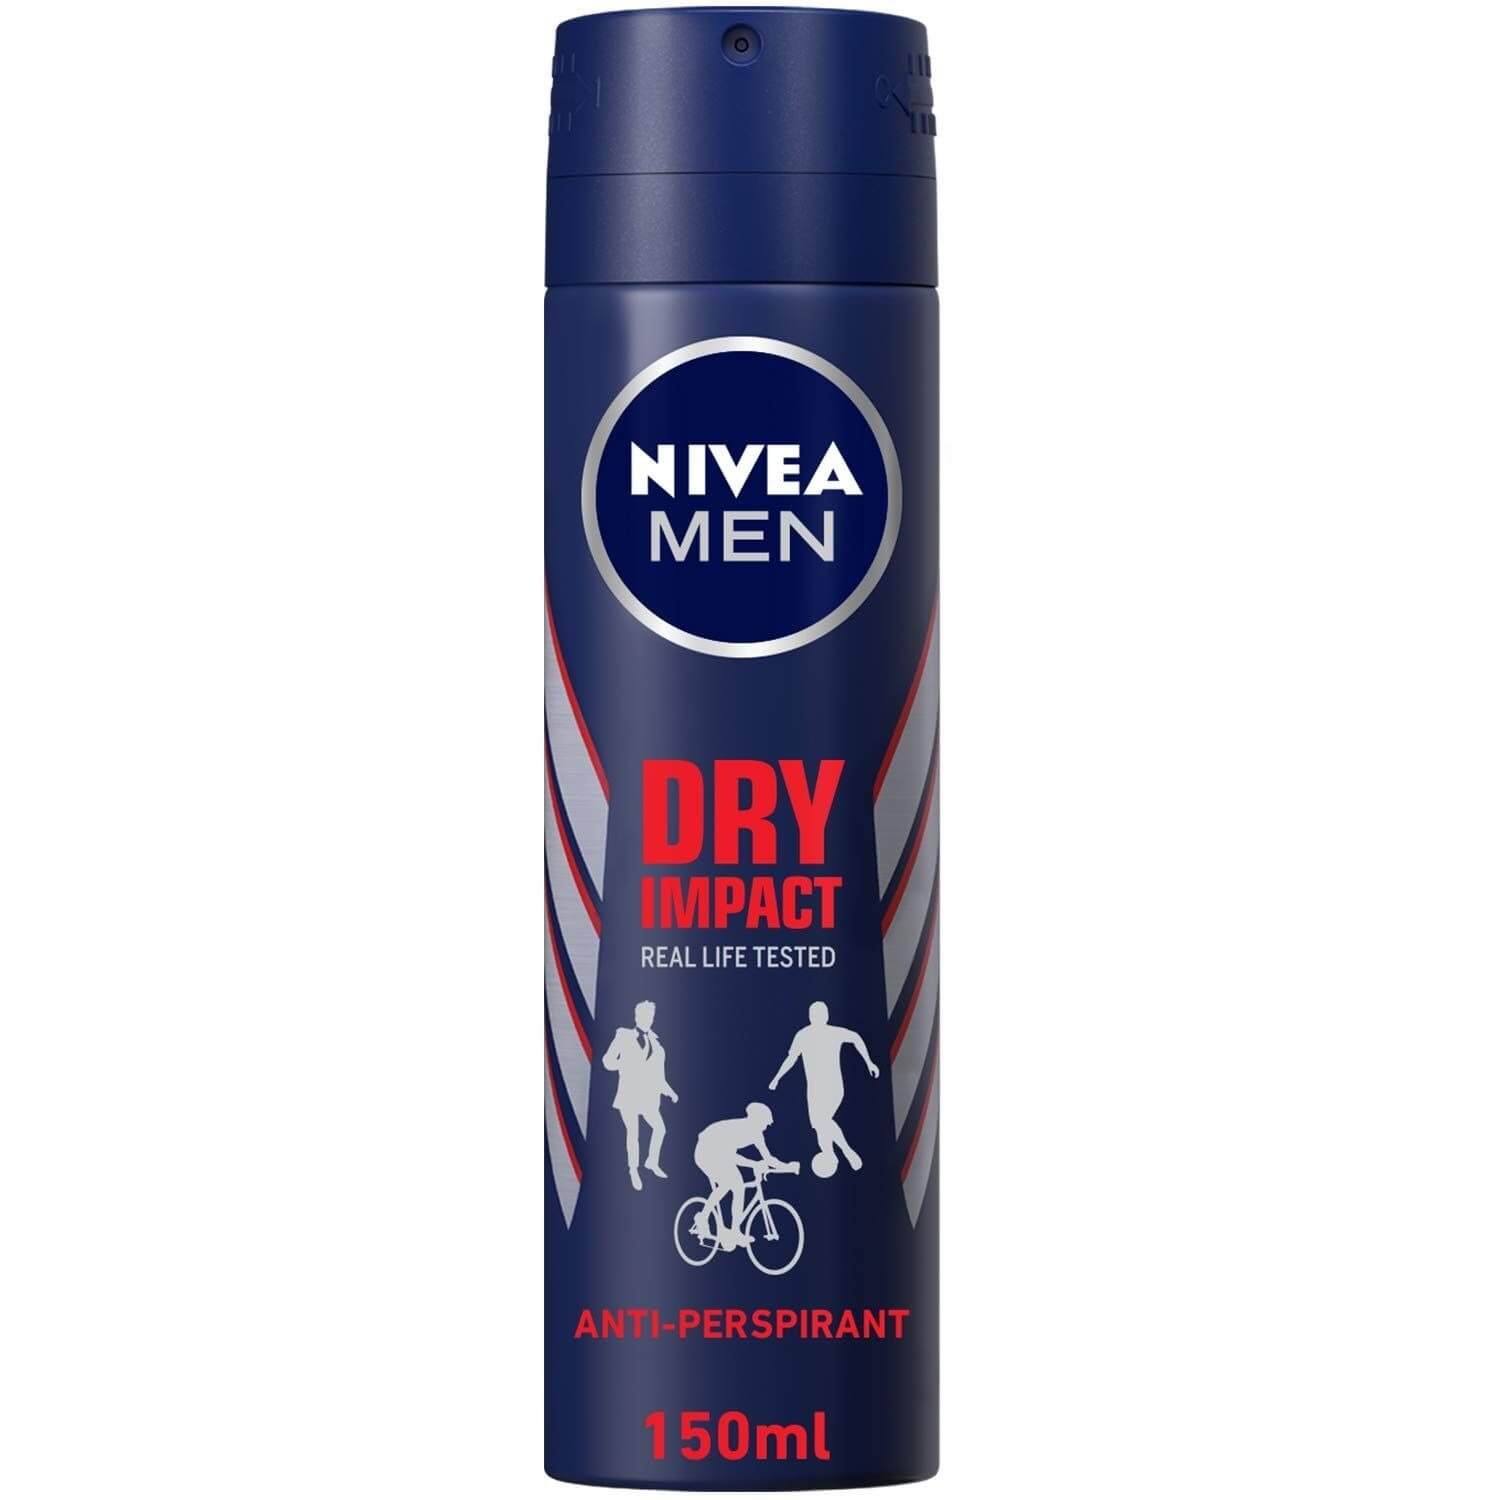 1591709147nivea-men-dry-impact-deodorant-spray-200ml.jpg